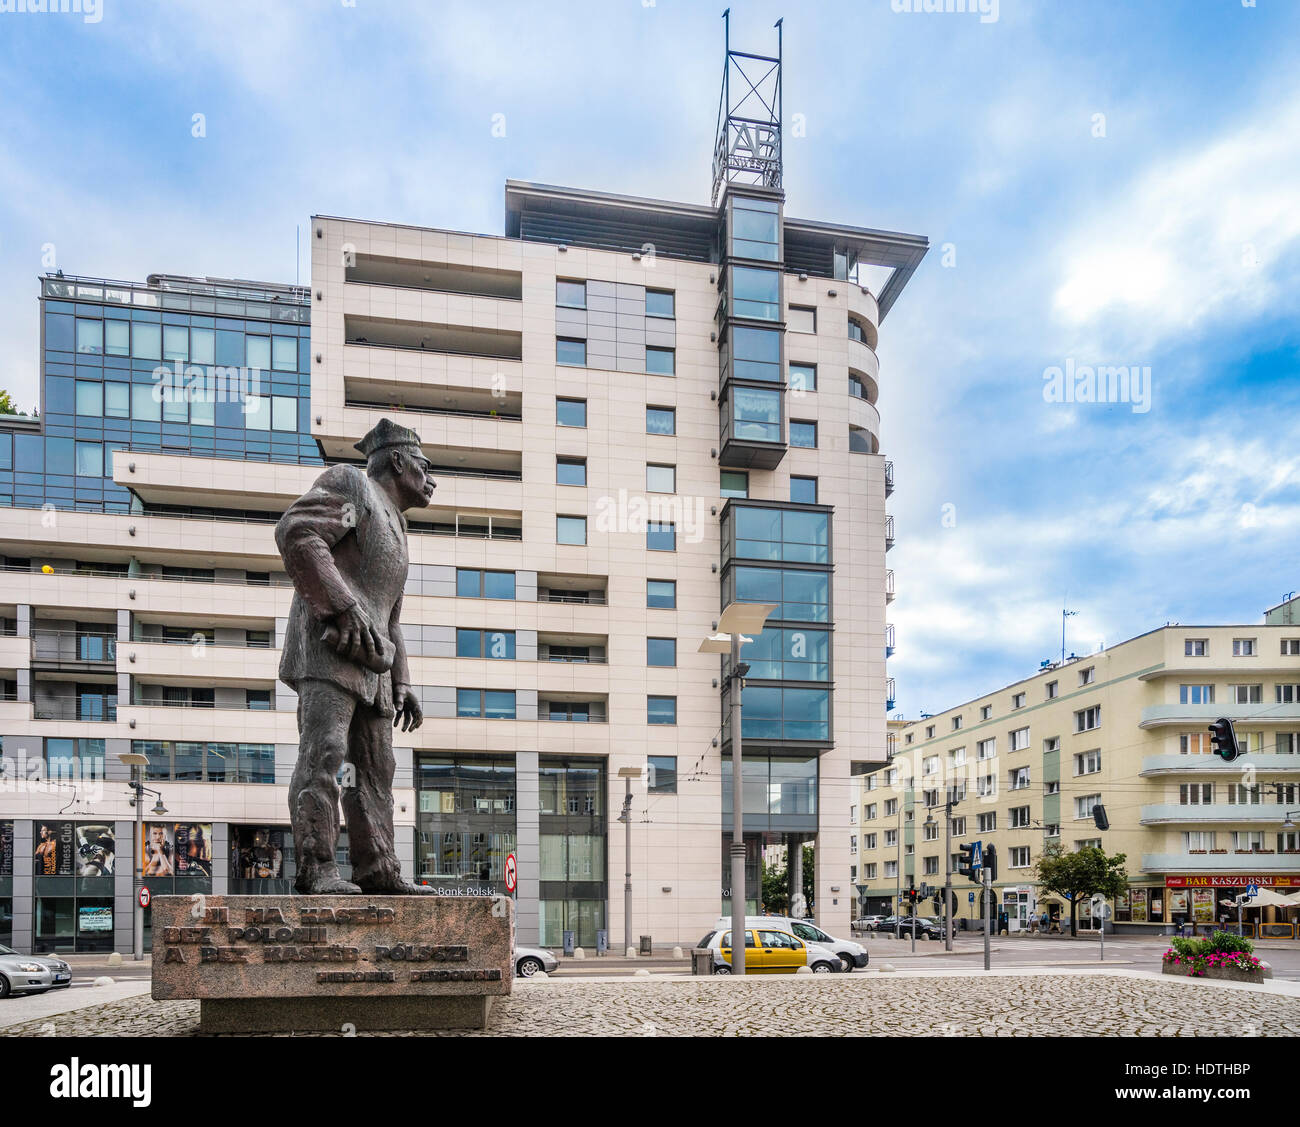 Poland, Pomerania, Gdynia, monument to the Kashubian activist Anthony Abraham and the modern Transatlantik apartment building at Kaszubski Square Stock Photo